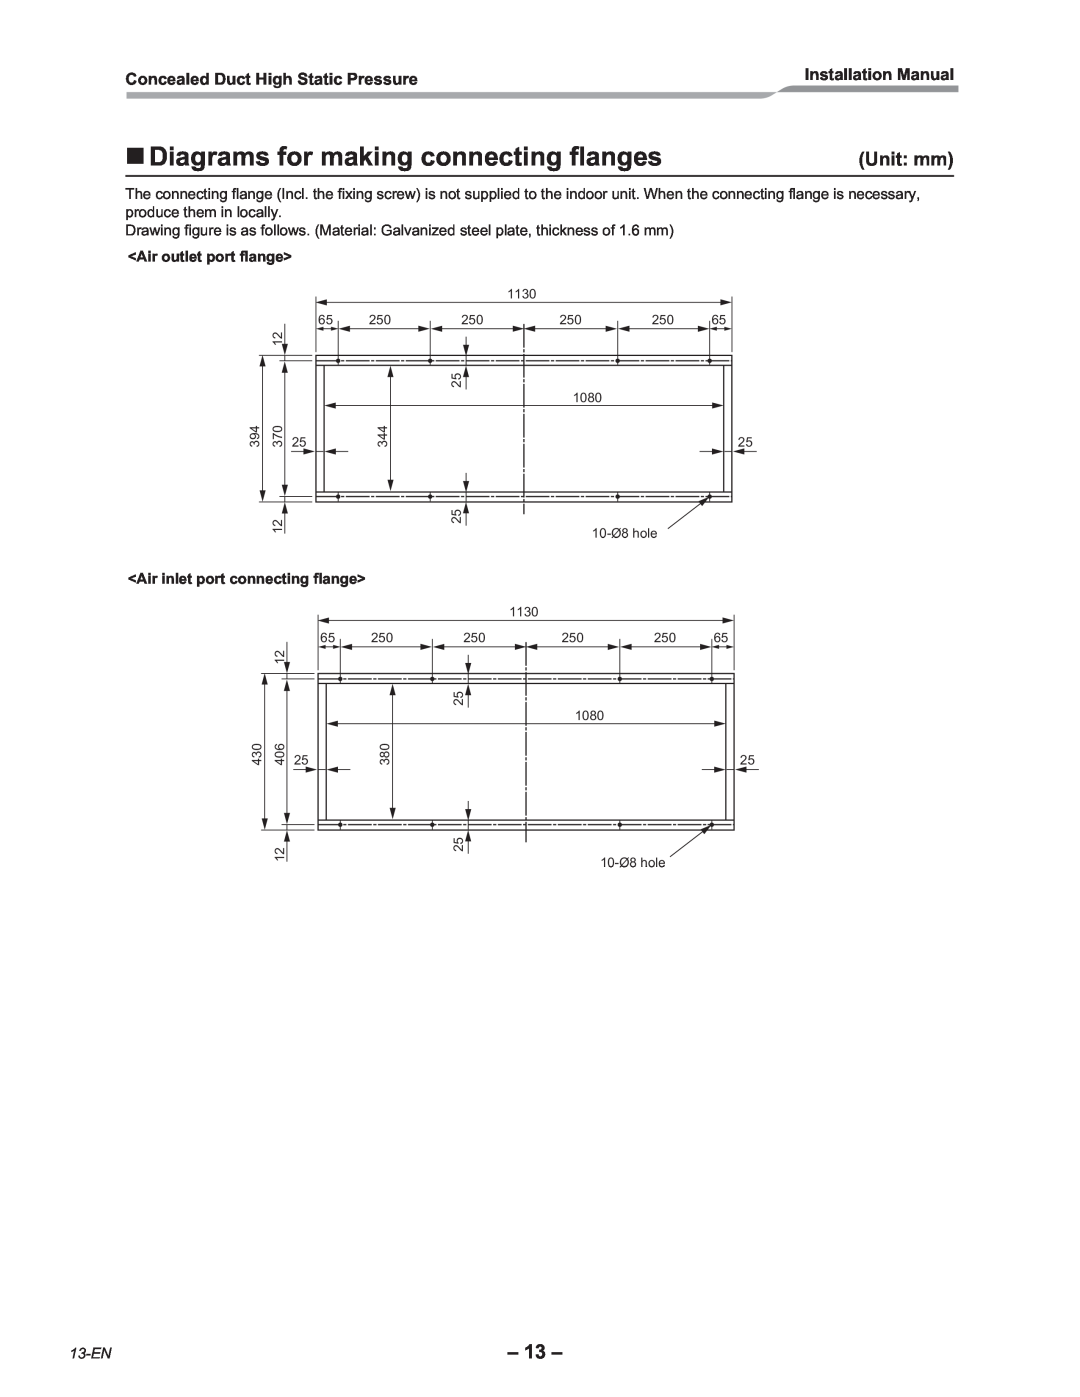 Toshiba RAV-SM2802DT-E Diagrams for making connecting flanges, Unit mm, Concealed Duct High Static Pressure, 13-EN 